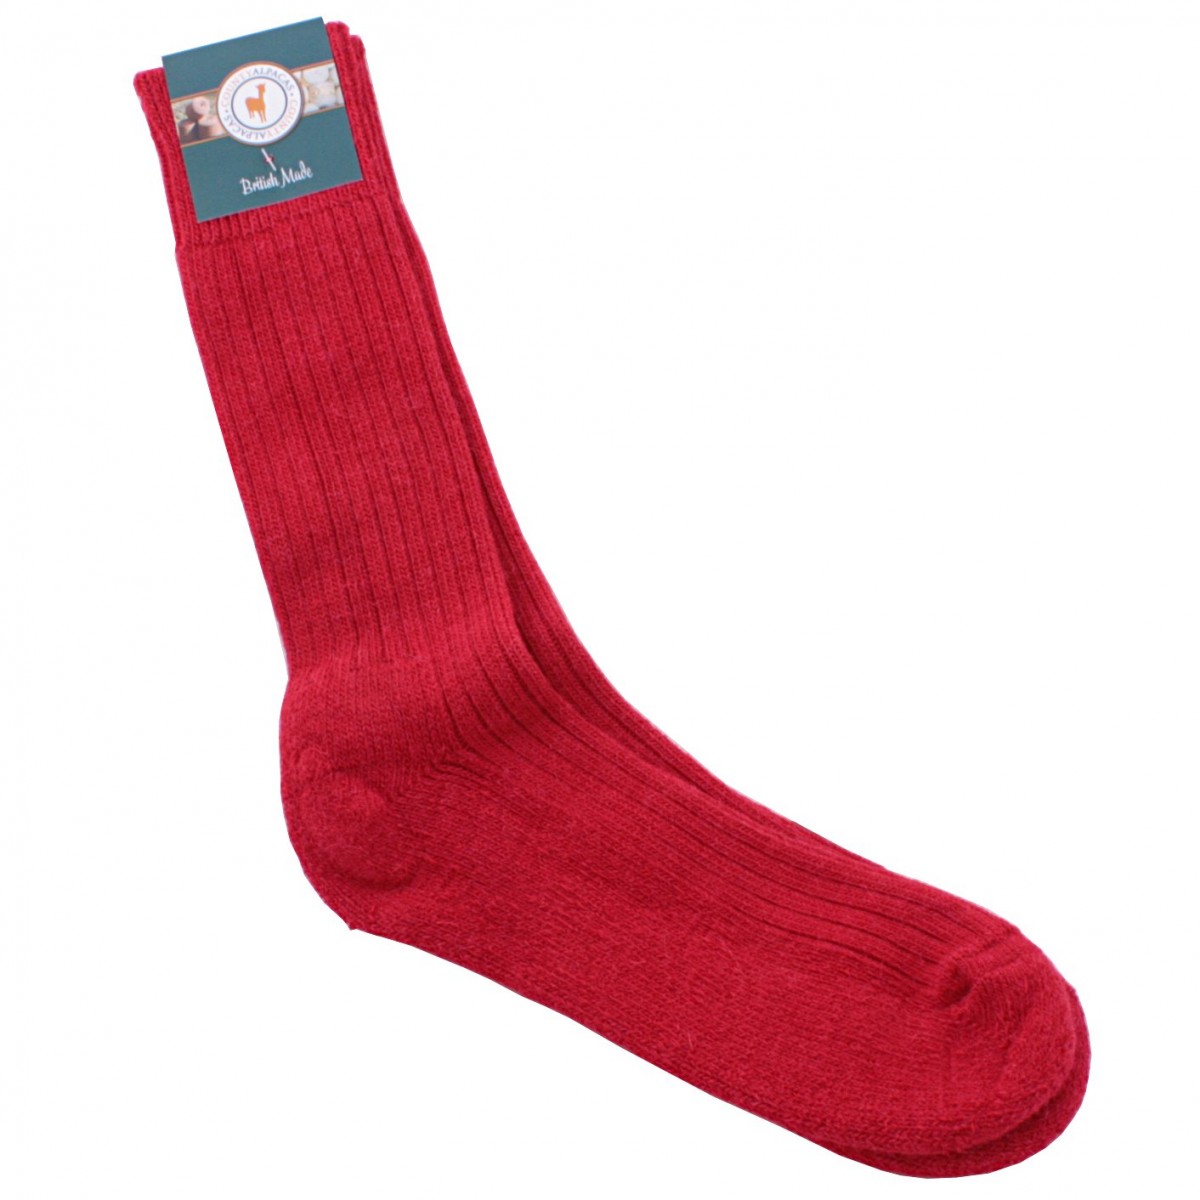 Pediwear Collection Red Alpaca Woollen Socks - Pediwear Accessories